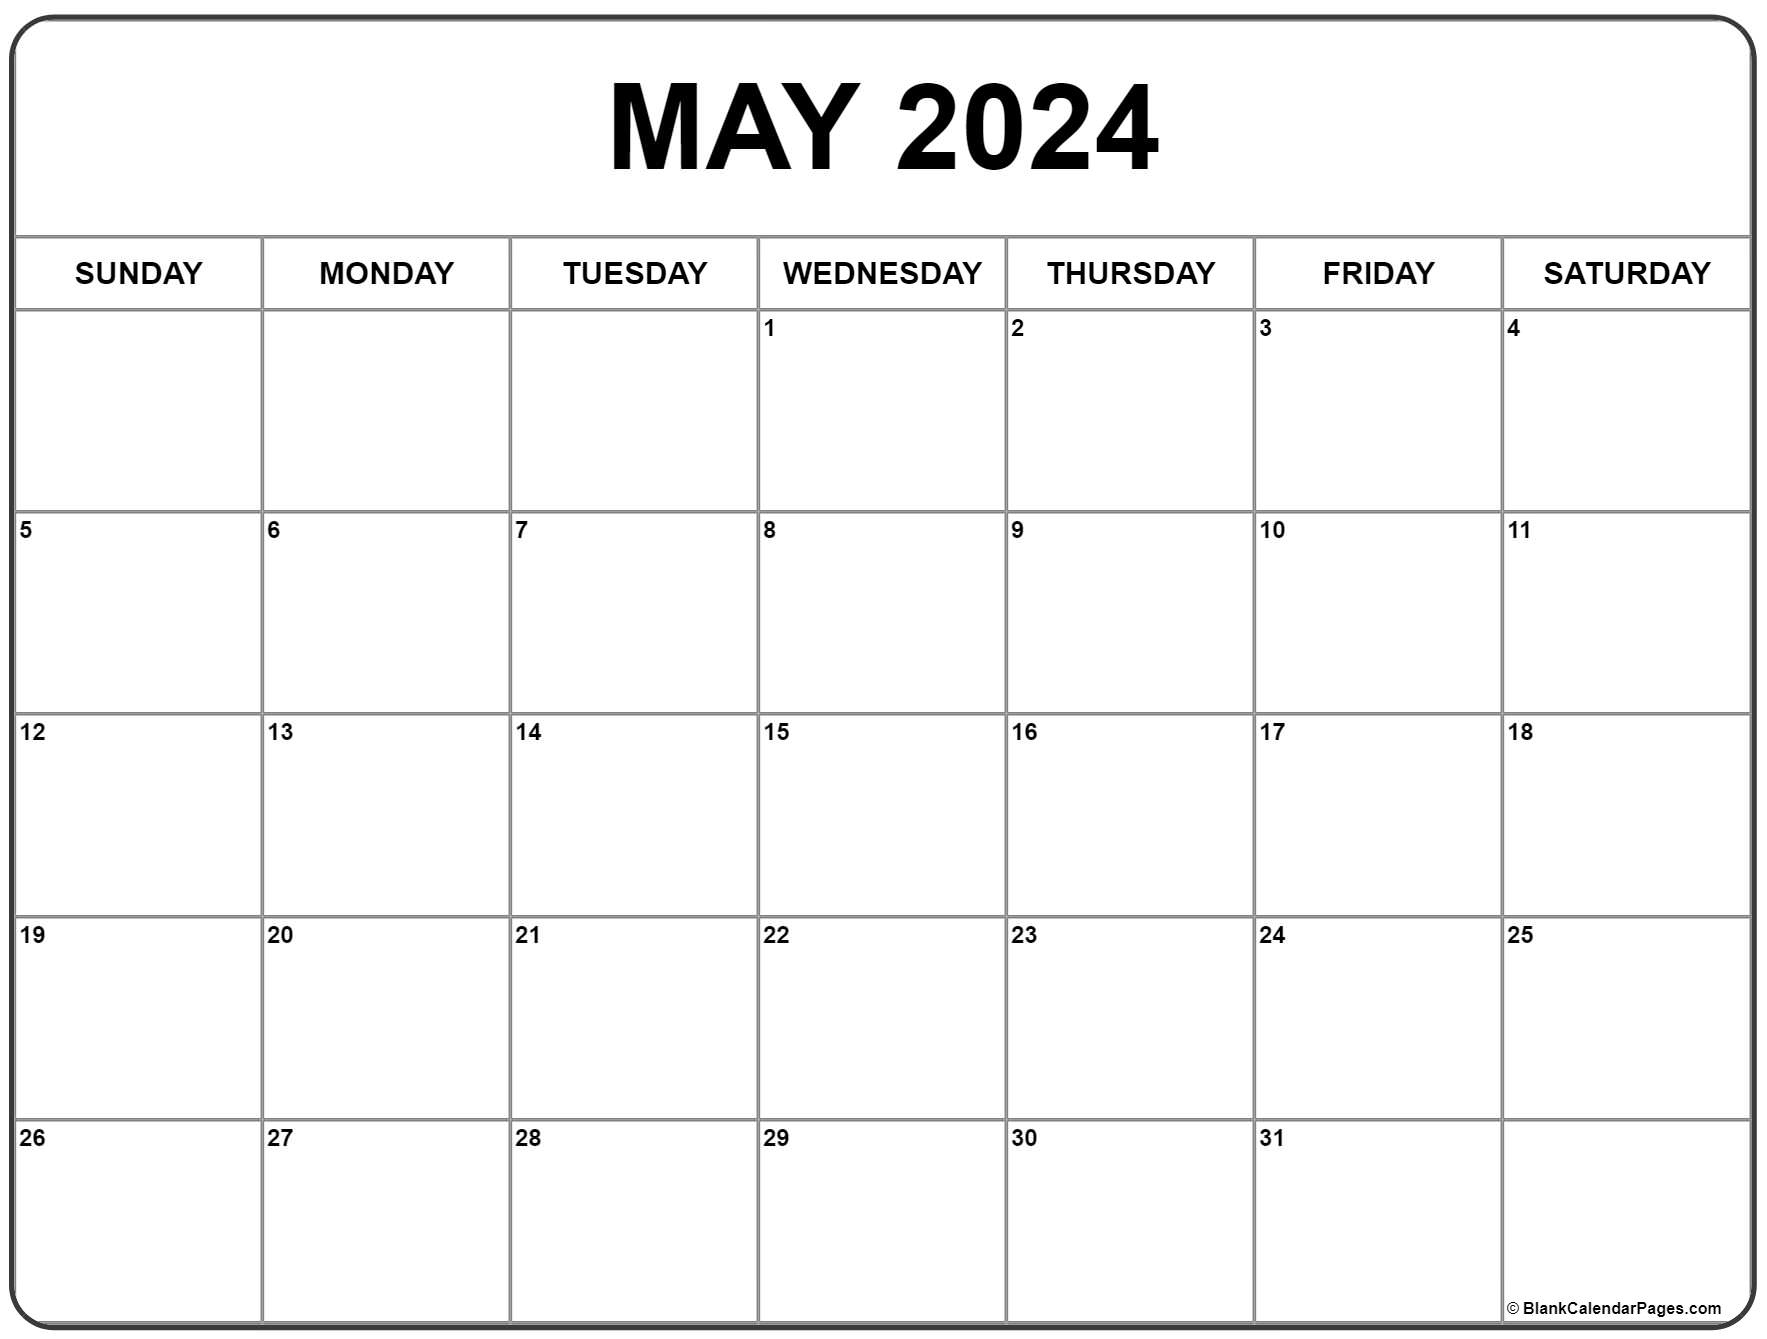 May 2024 Calendar | Free Printable Calendar | Printable Calendar 2024 May